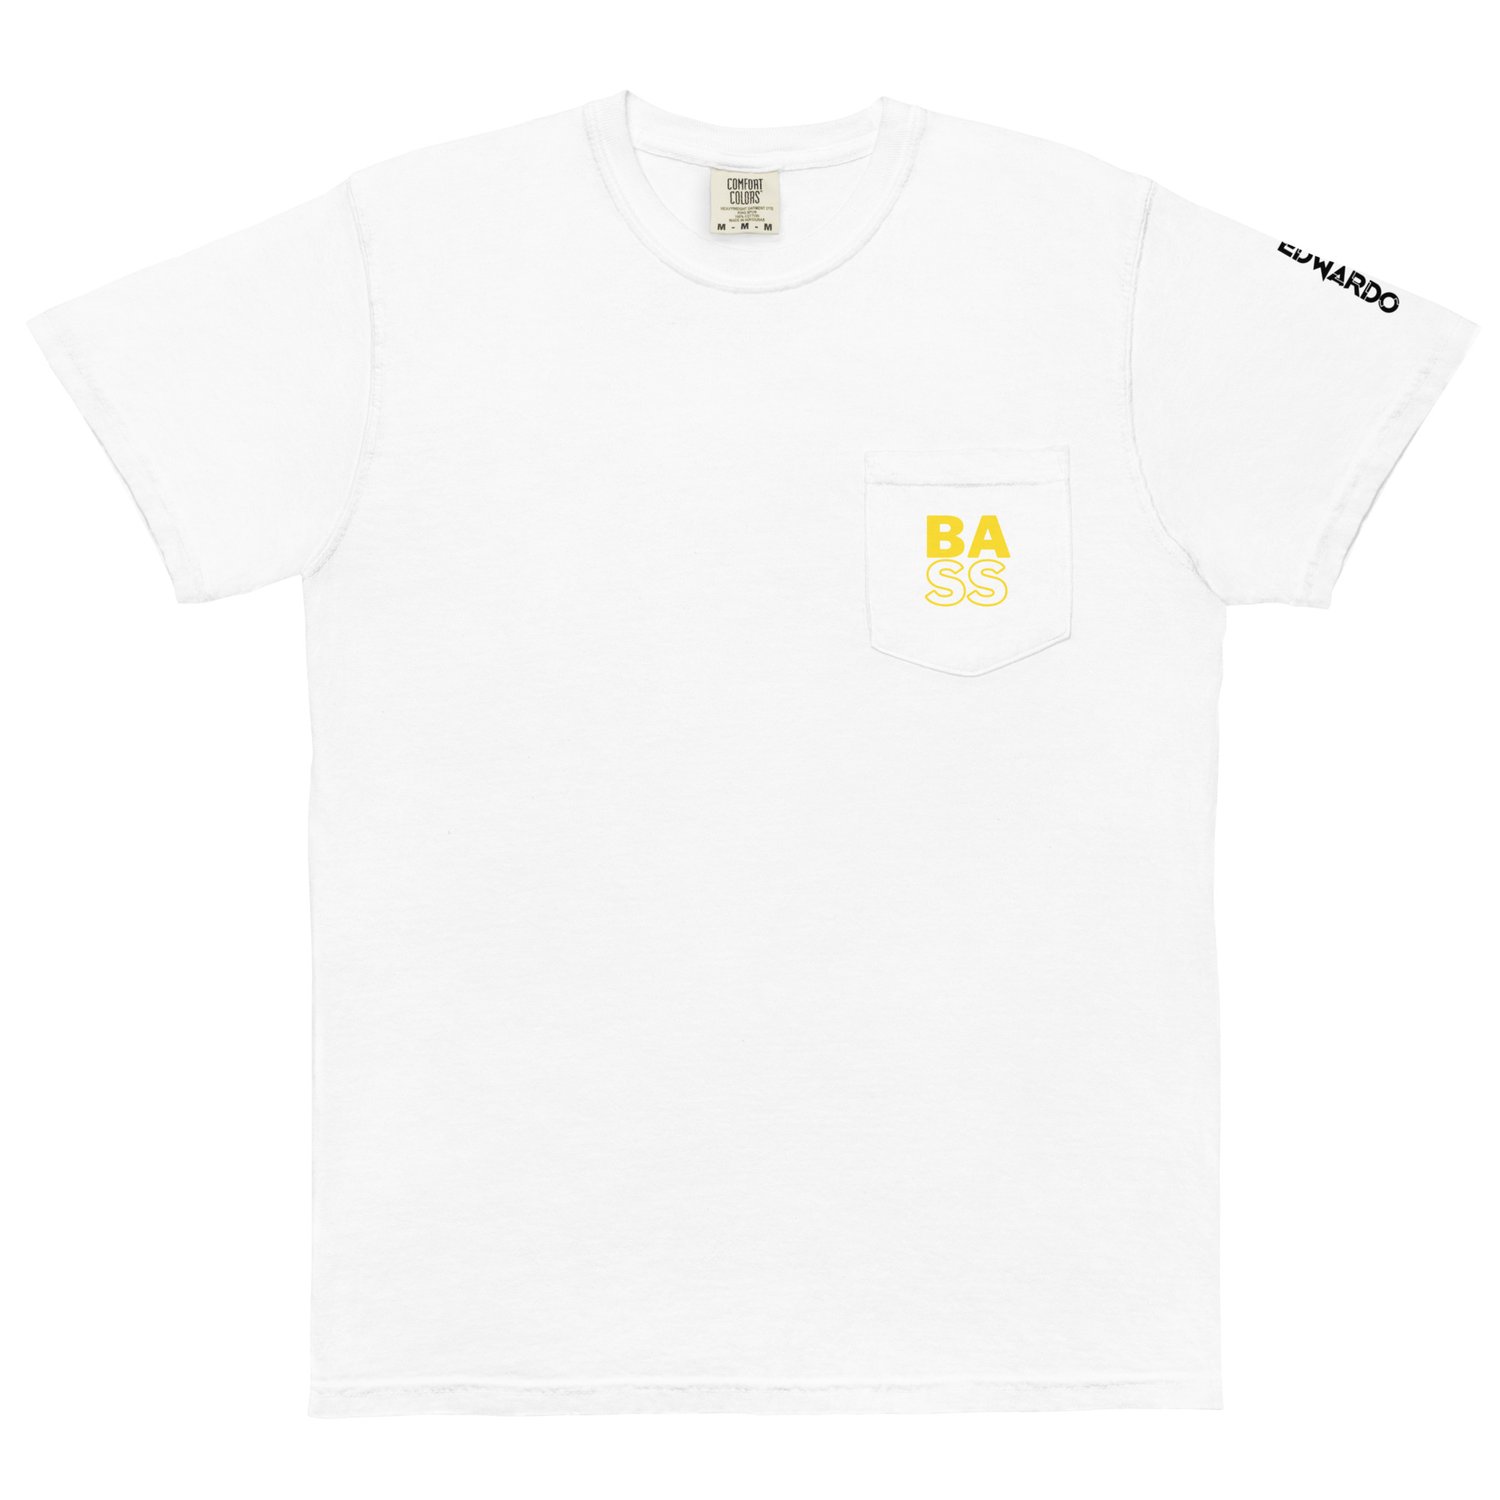 Unisex pocket t-shirt - White Bass